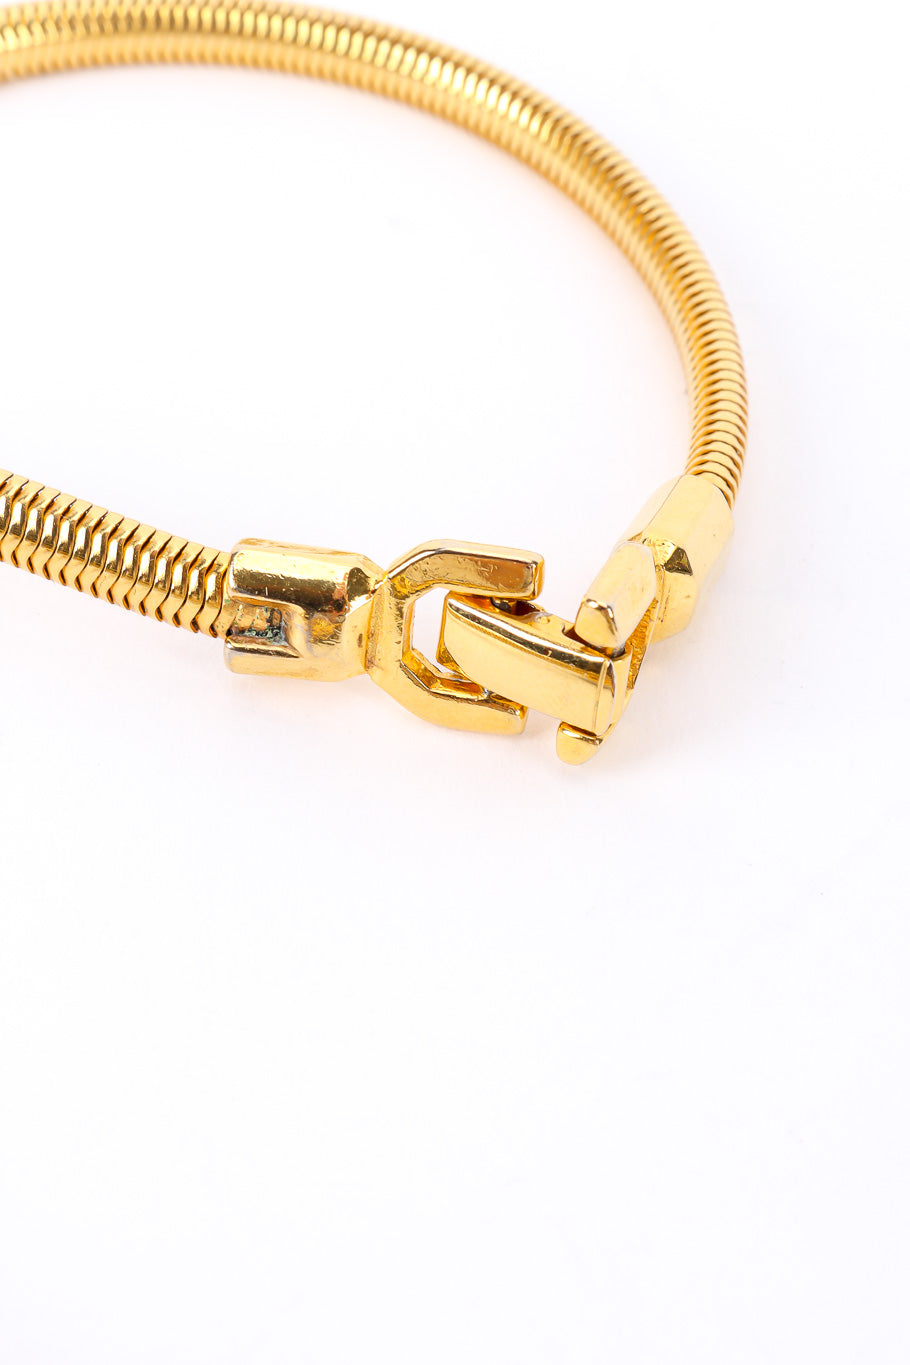 Vintage Pierre Cardin Revolving Charm Tablet Necklace fold over clasp closed closeup @Recessla